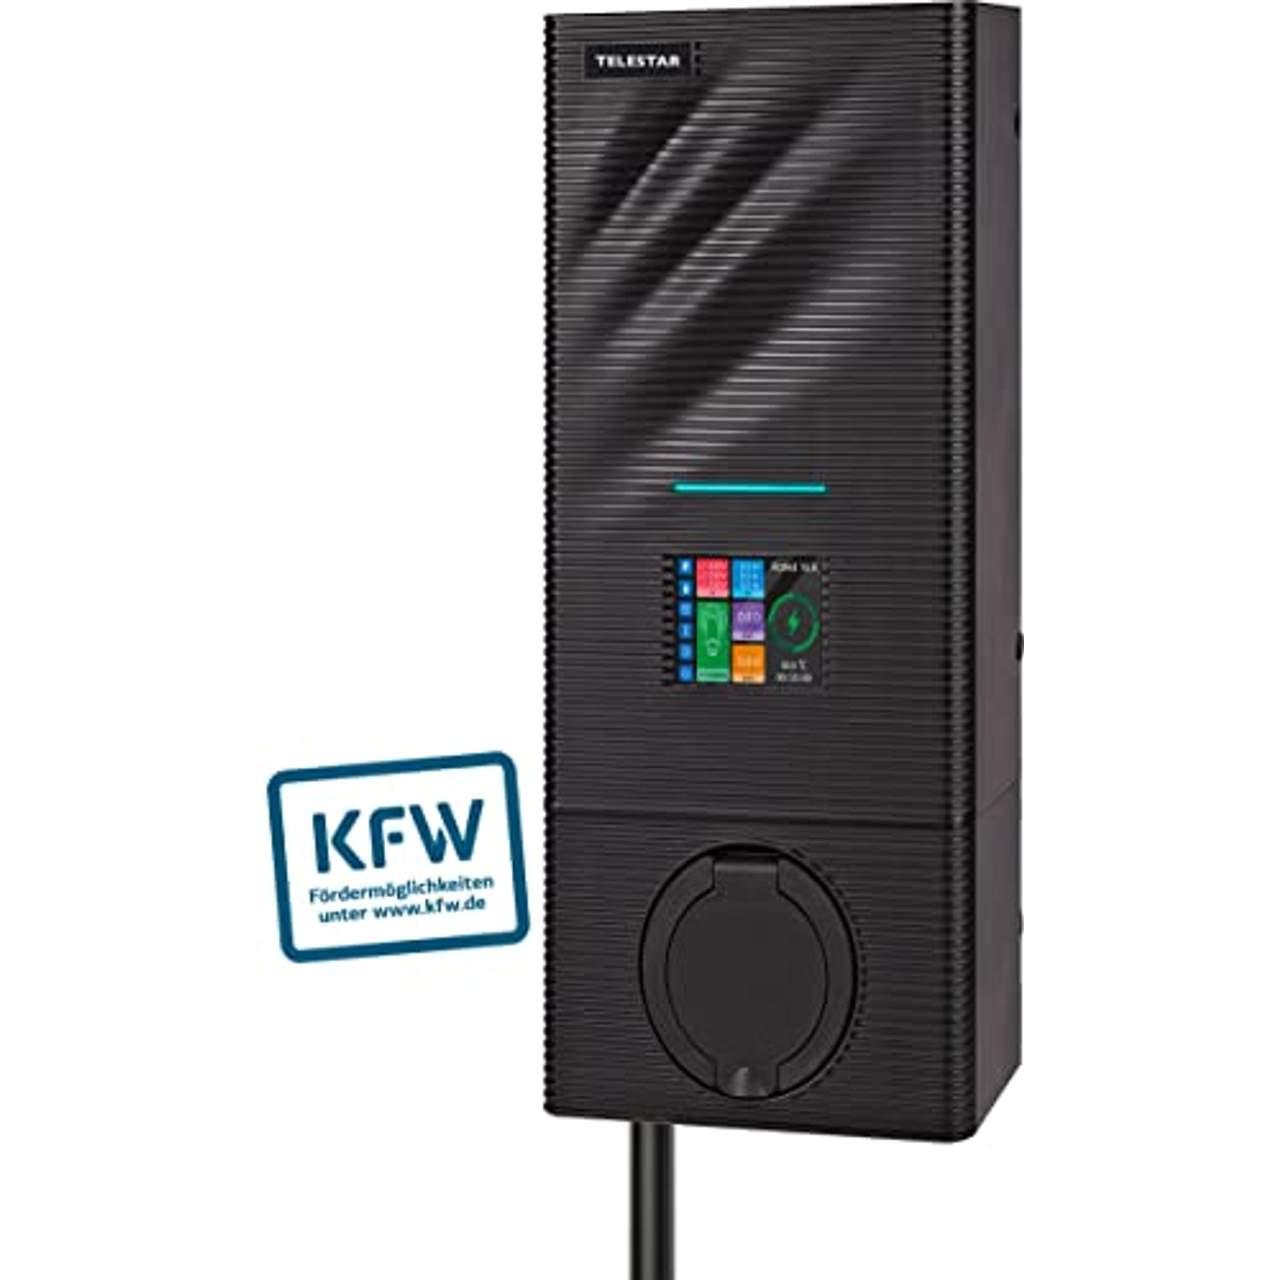 Telestar EC 311 S 11 kW Smarte Wallbox